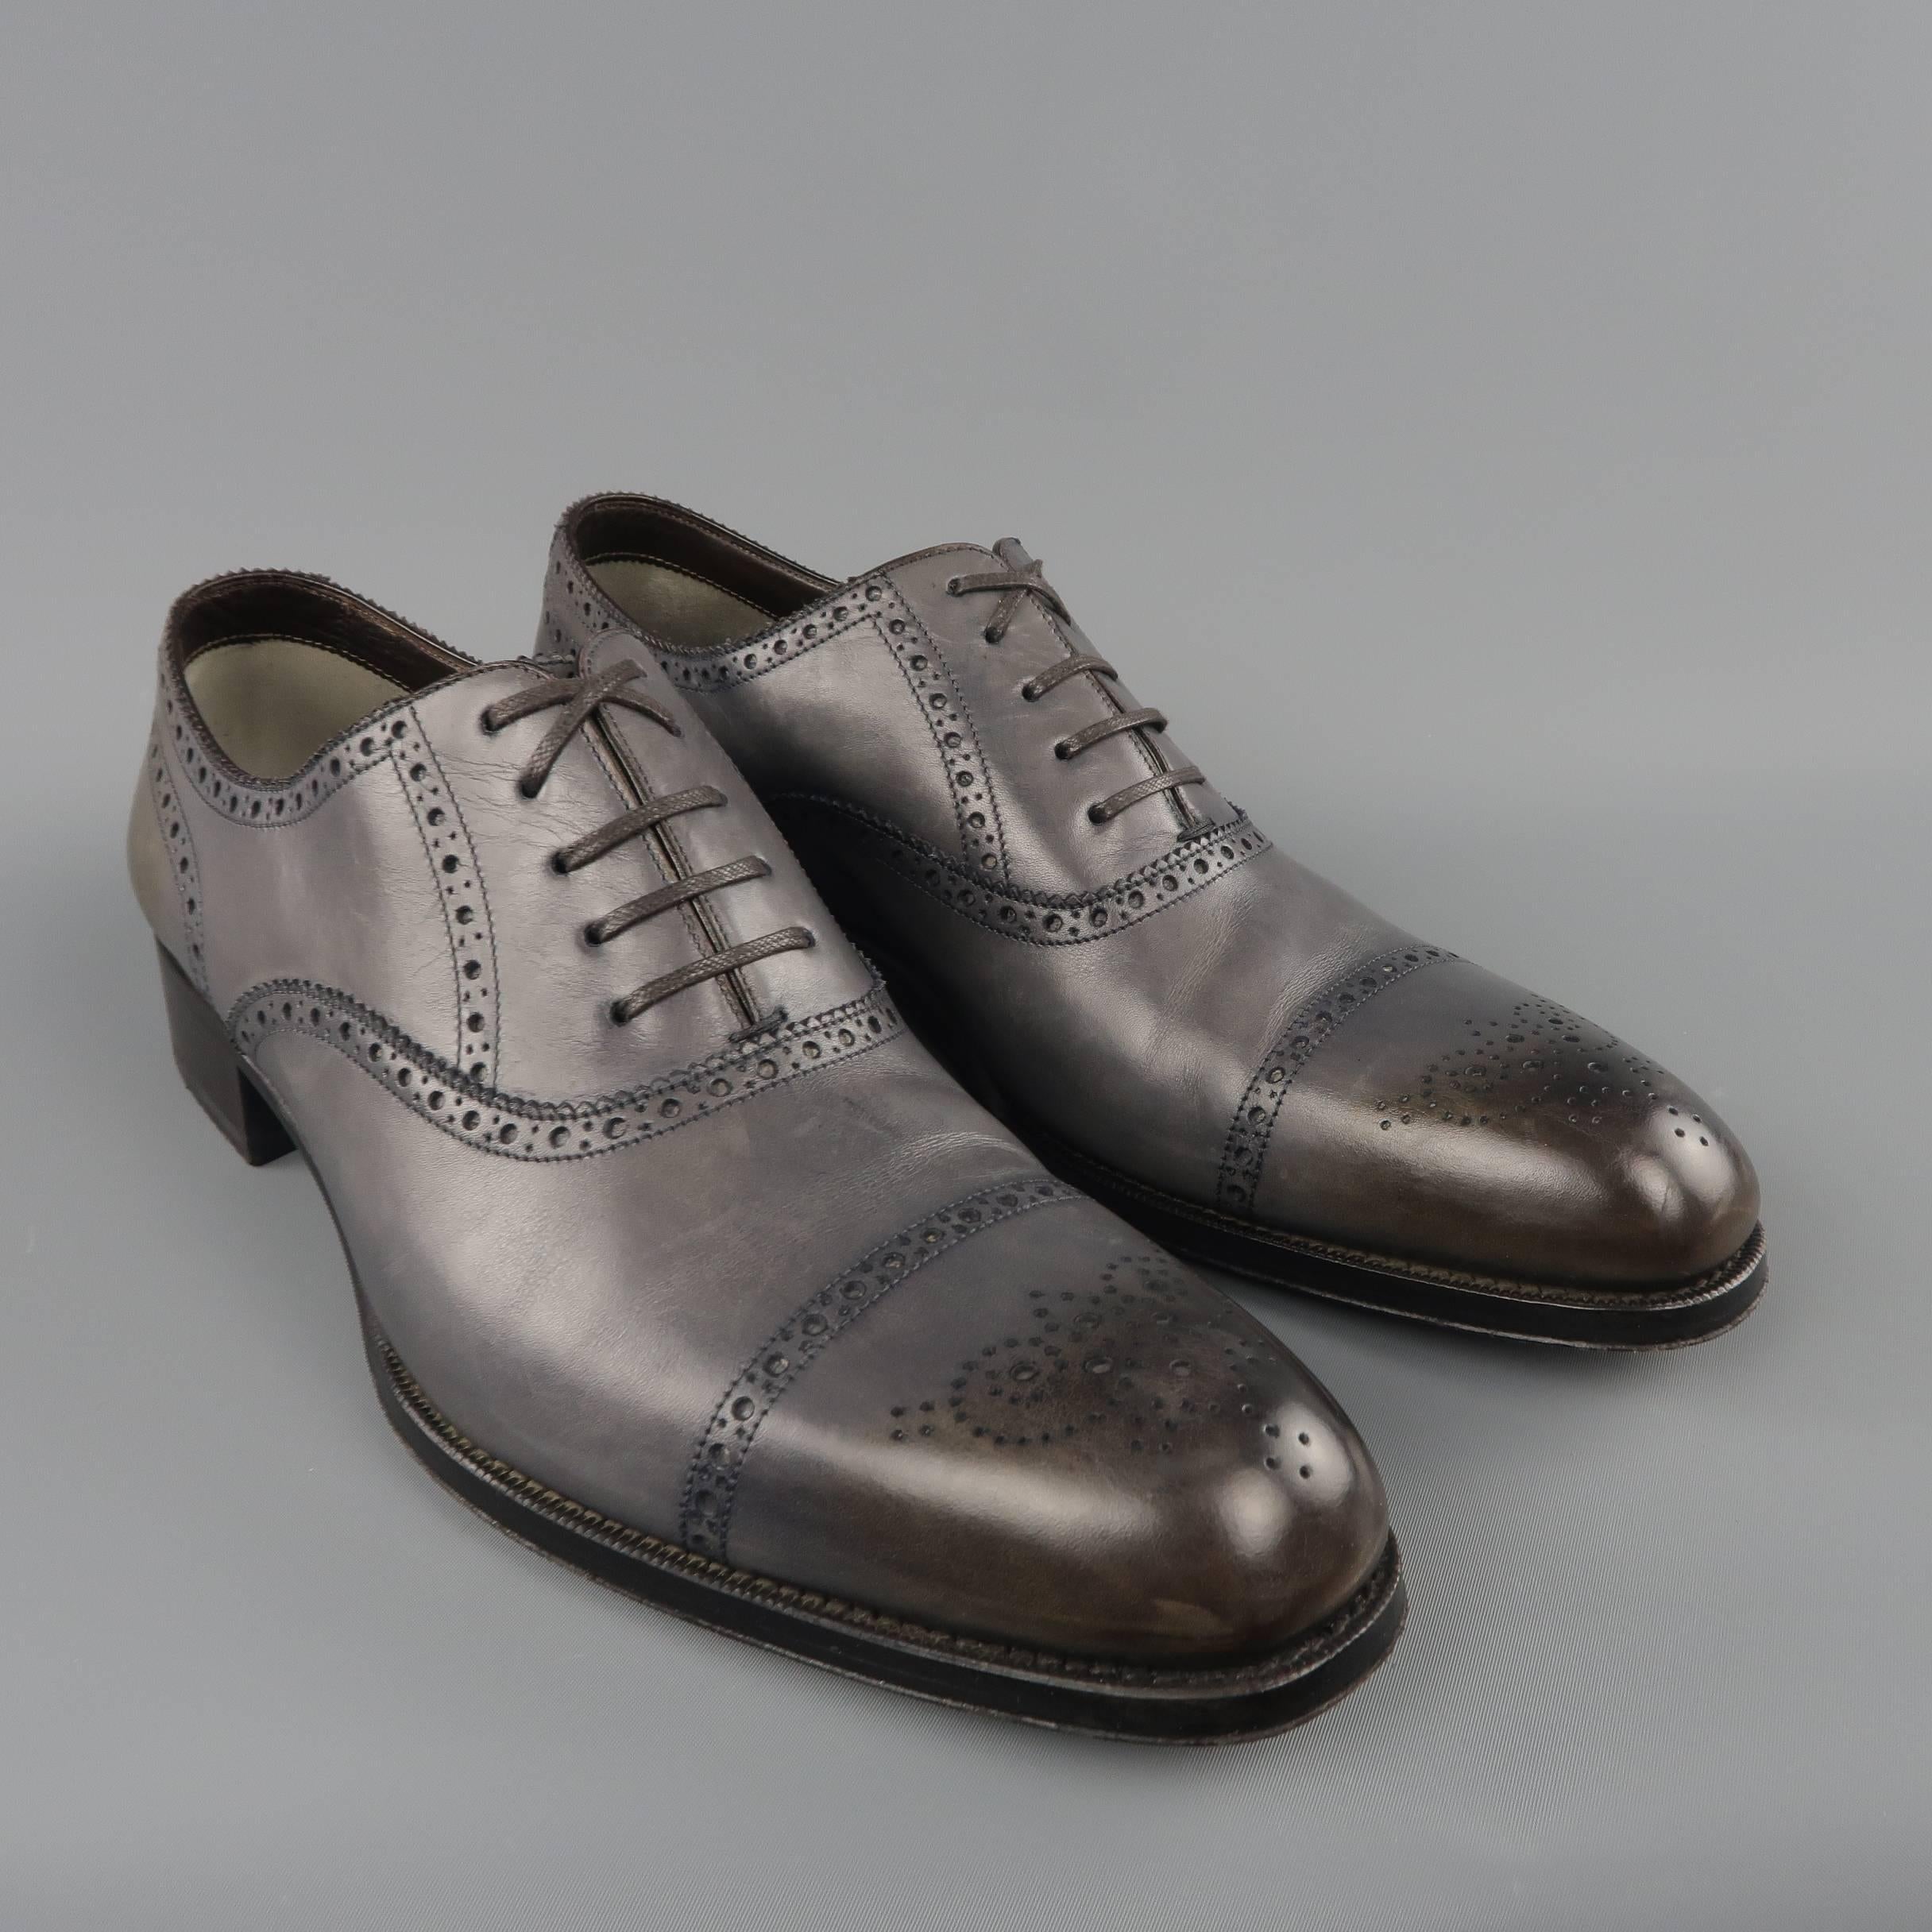 TOM FORD Shoes - Leather, Gray, Black, Dress, Edgar Medallion 1